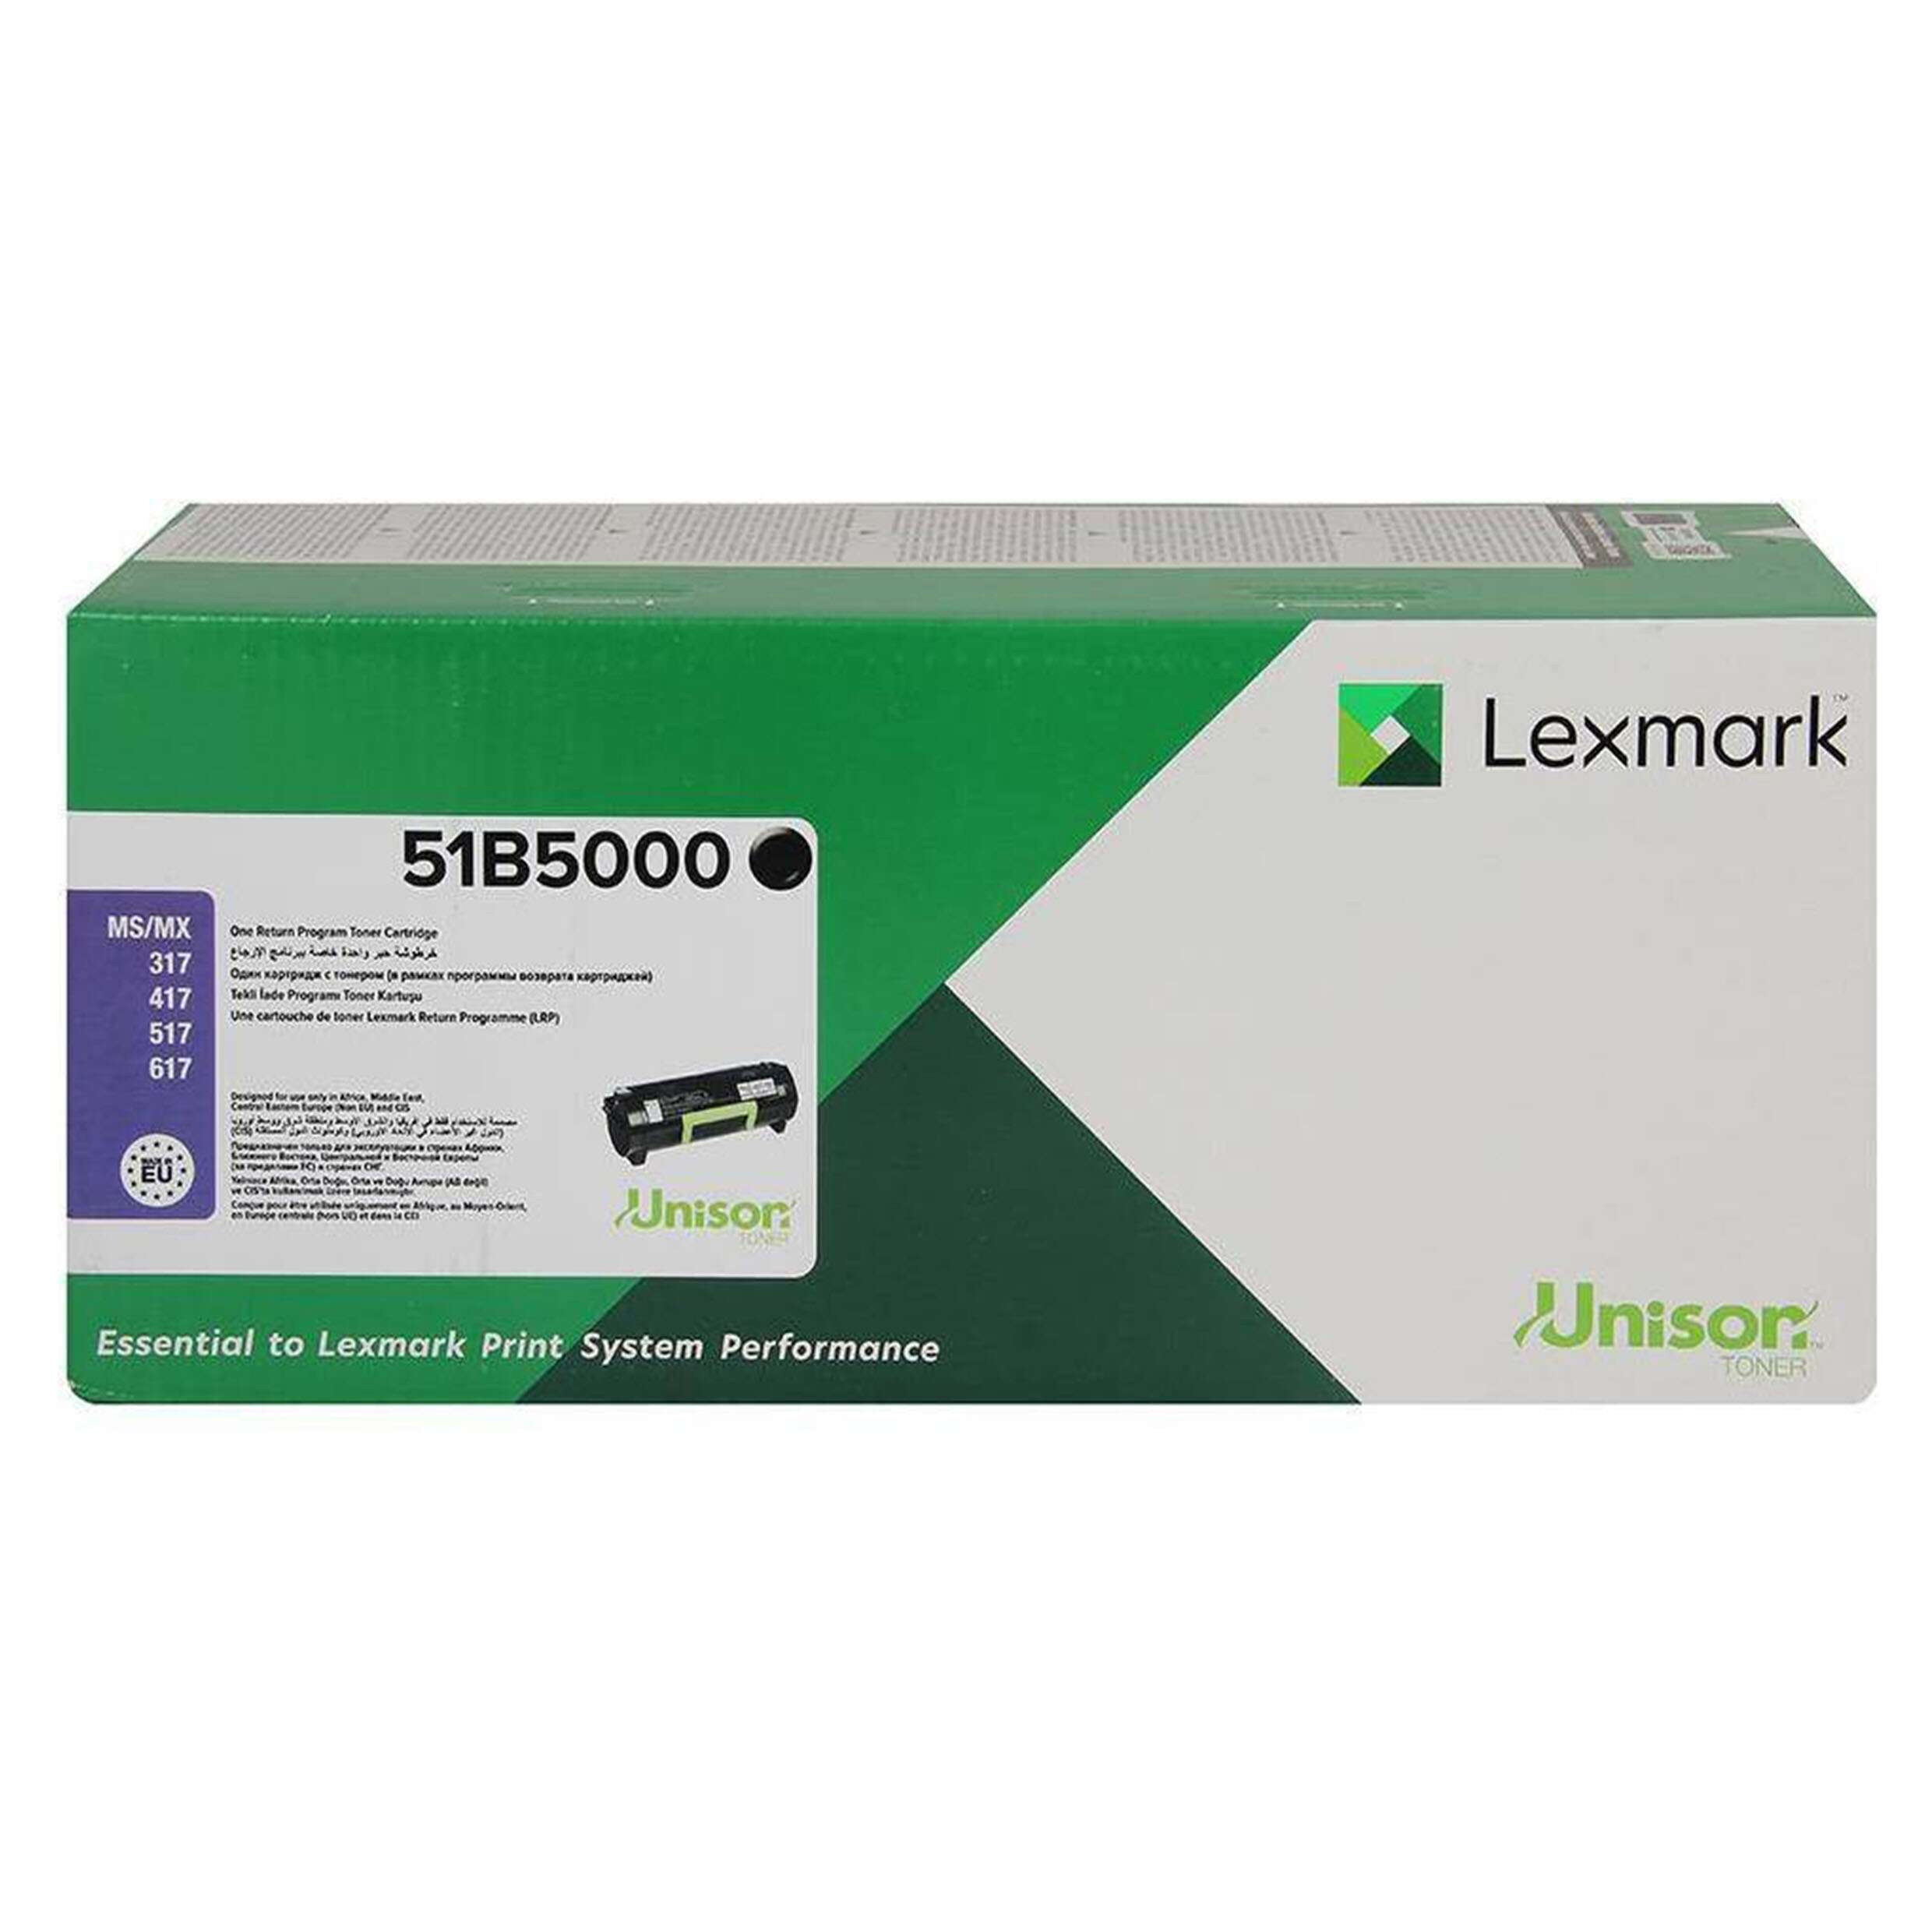 Lexmark MS/MX 317